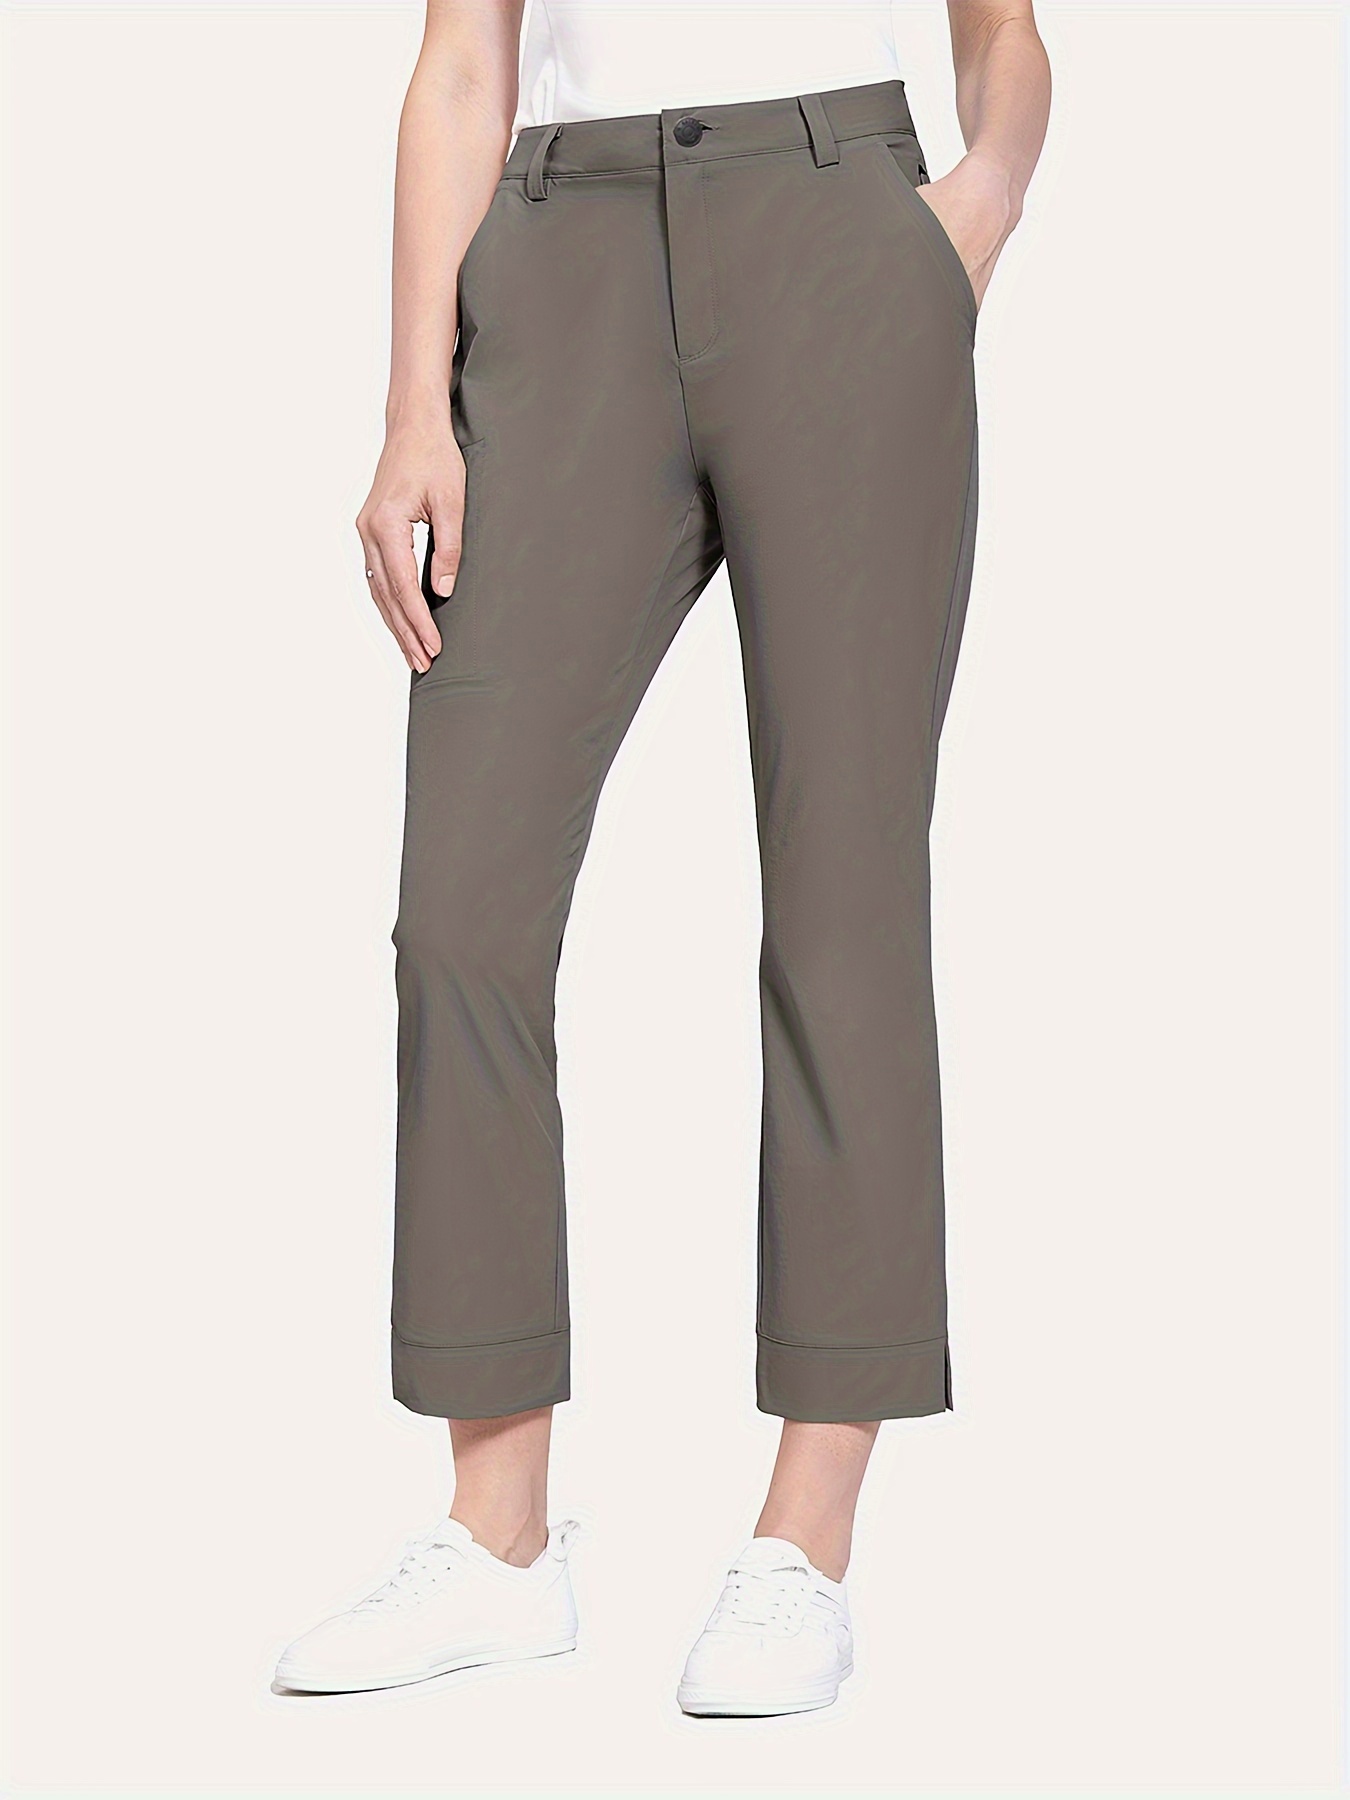 Women Golf Pants Split Pant Legs Slim Elastic Trousers Quick-Drying Lady  Golf Clothing Sports Tennis Pants, Pants -  Canada